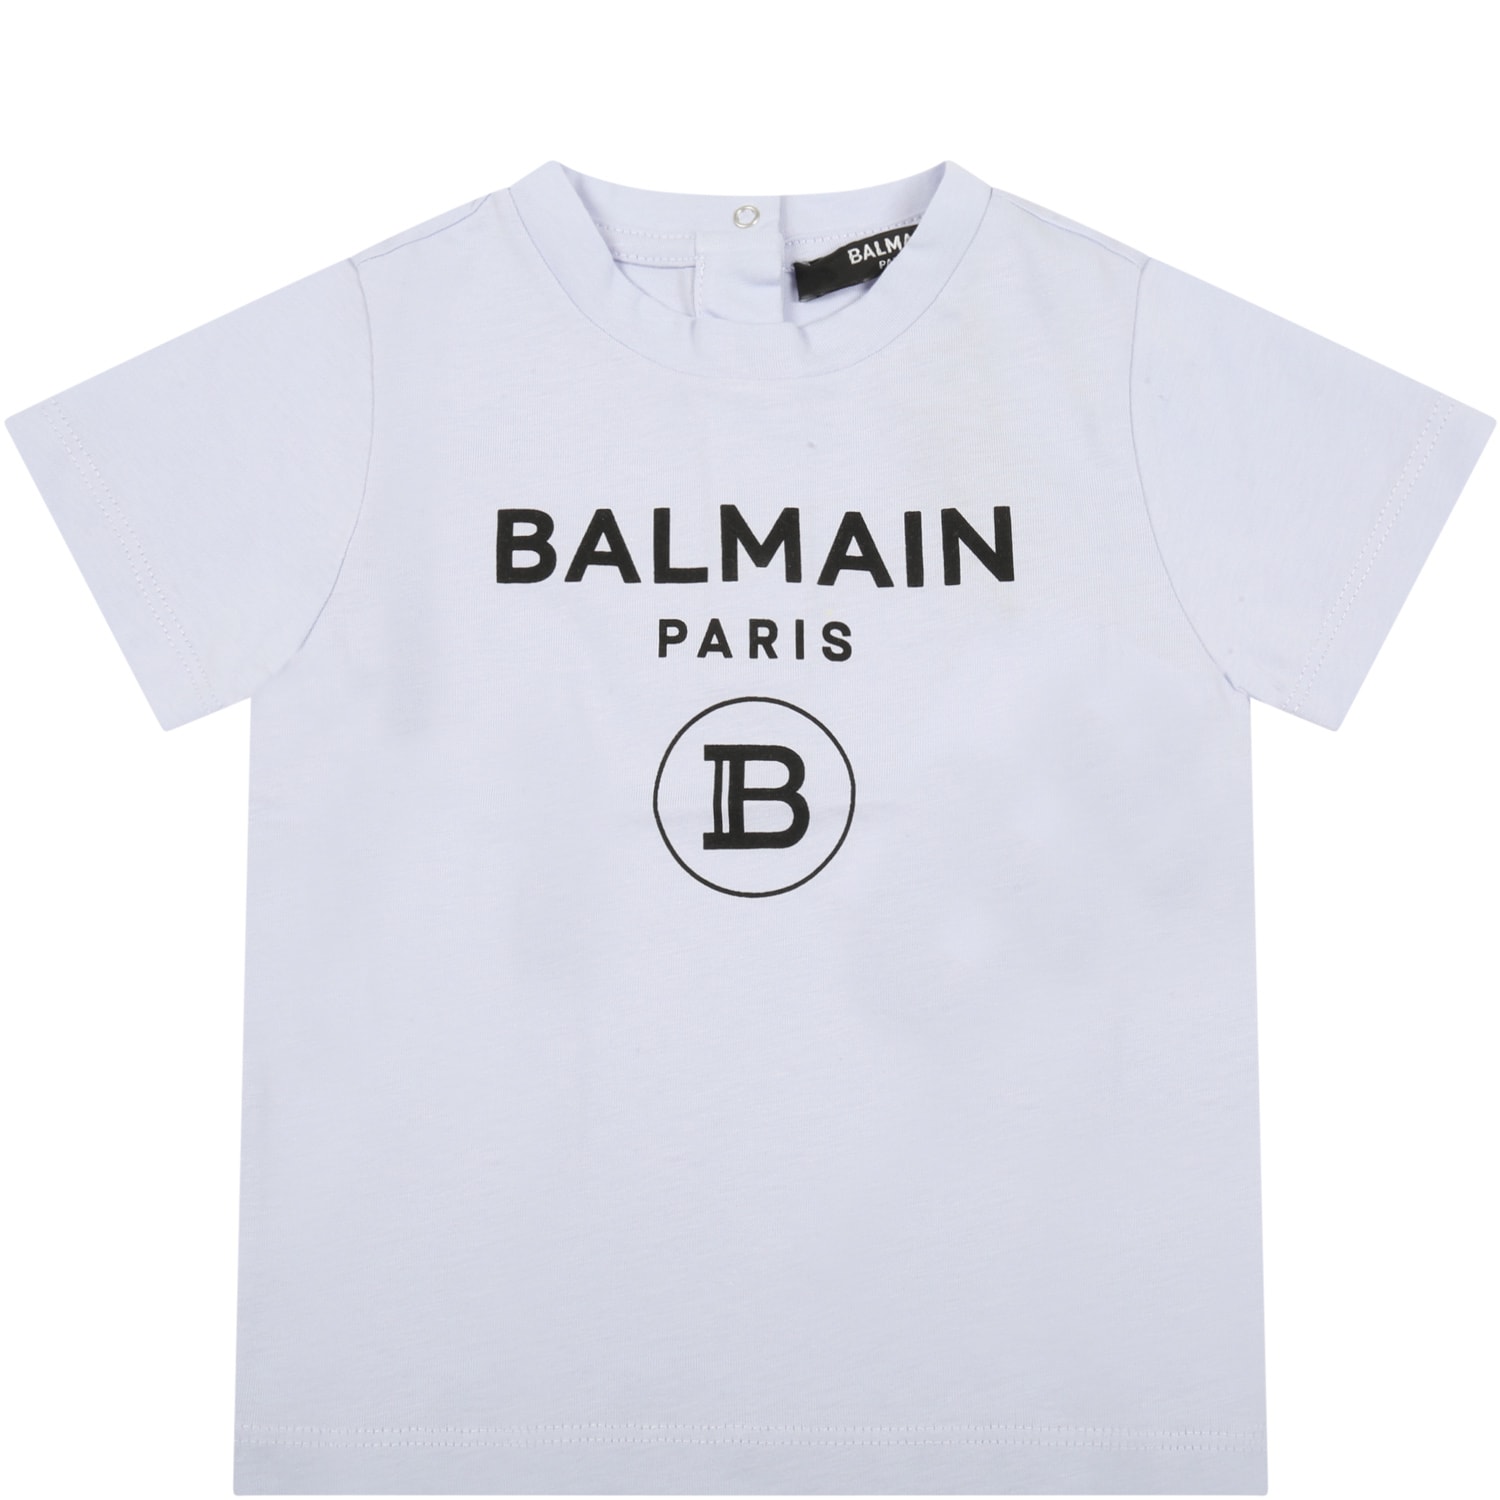 Balmain Light Blue T-shirt For Baby Boy With Logos